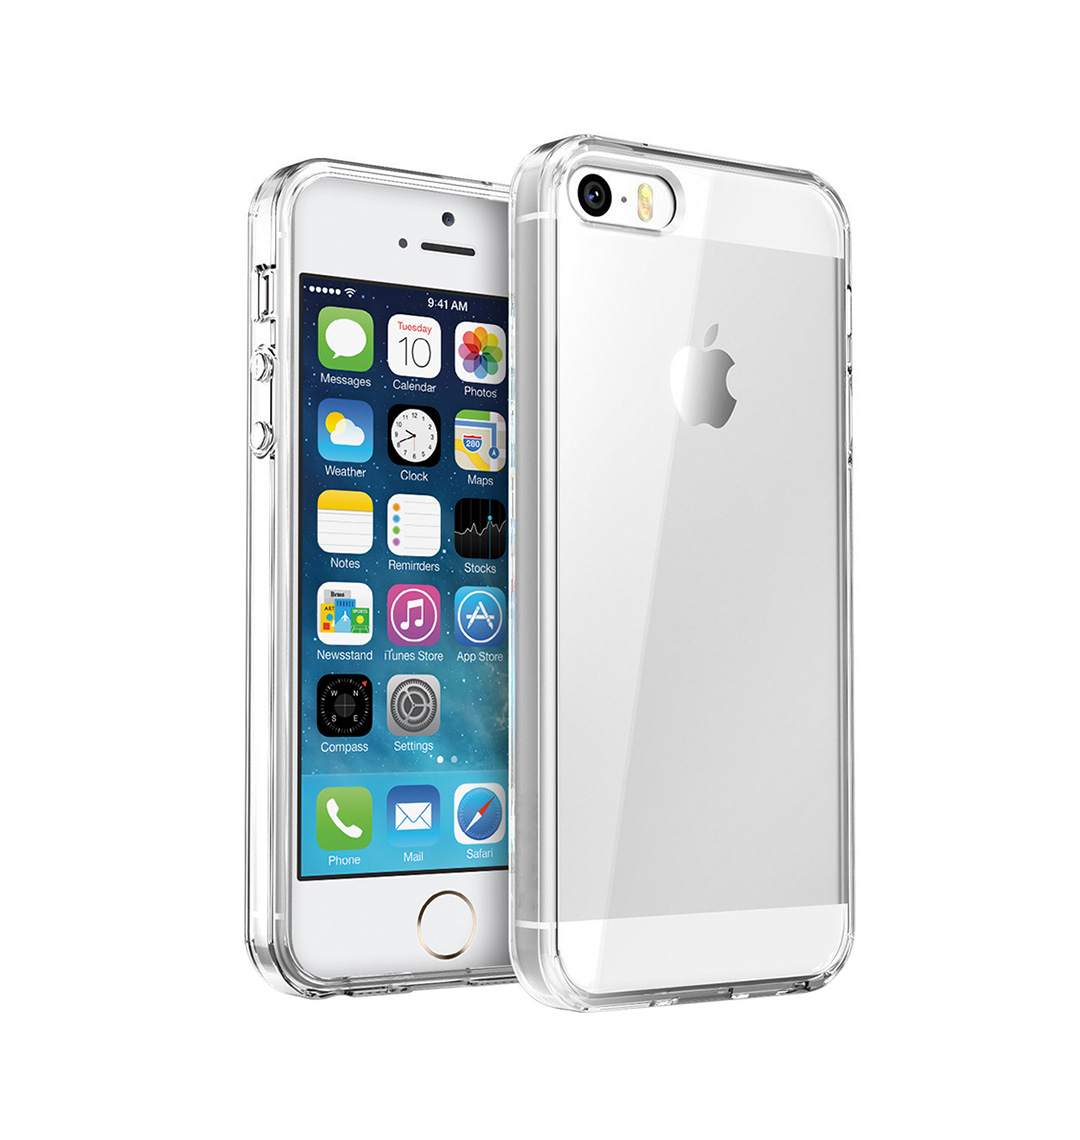 sum Nerve Skibform Iphone 5C Transparent Back Cover Soft & Full Protection in sri lanka